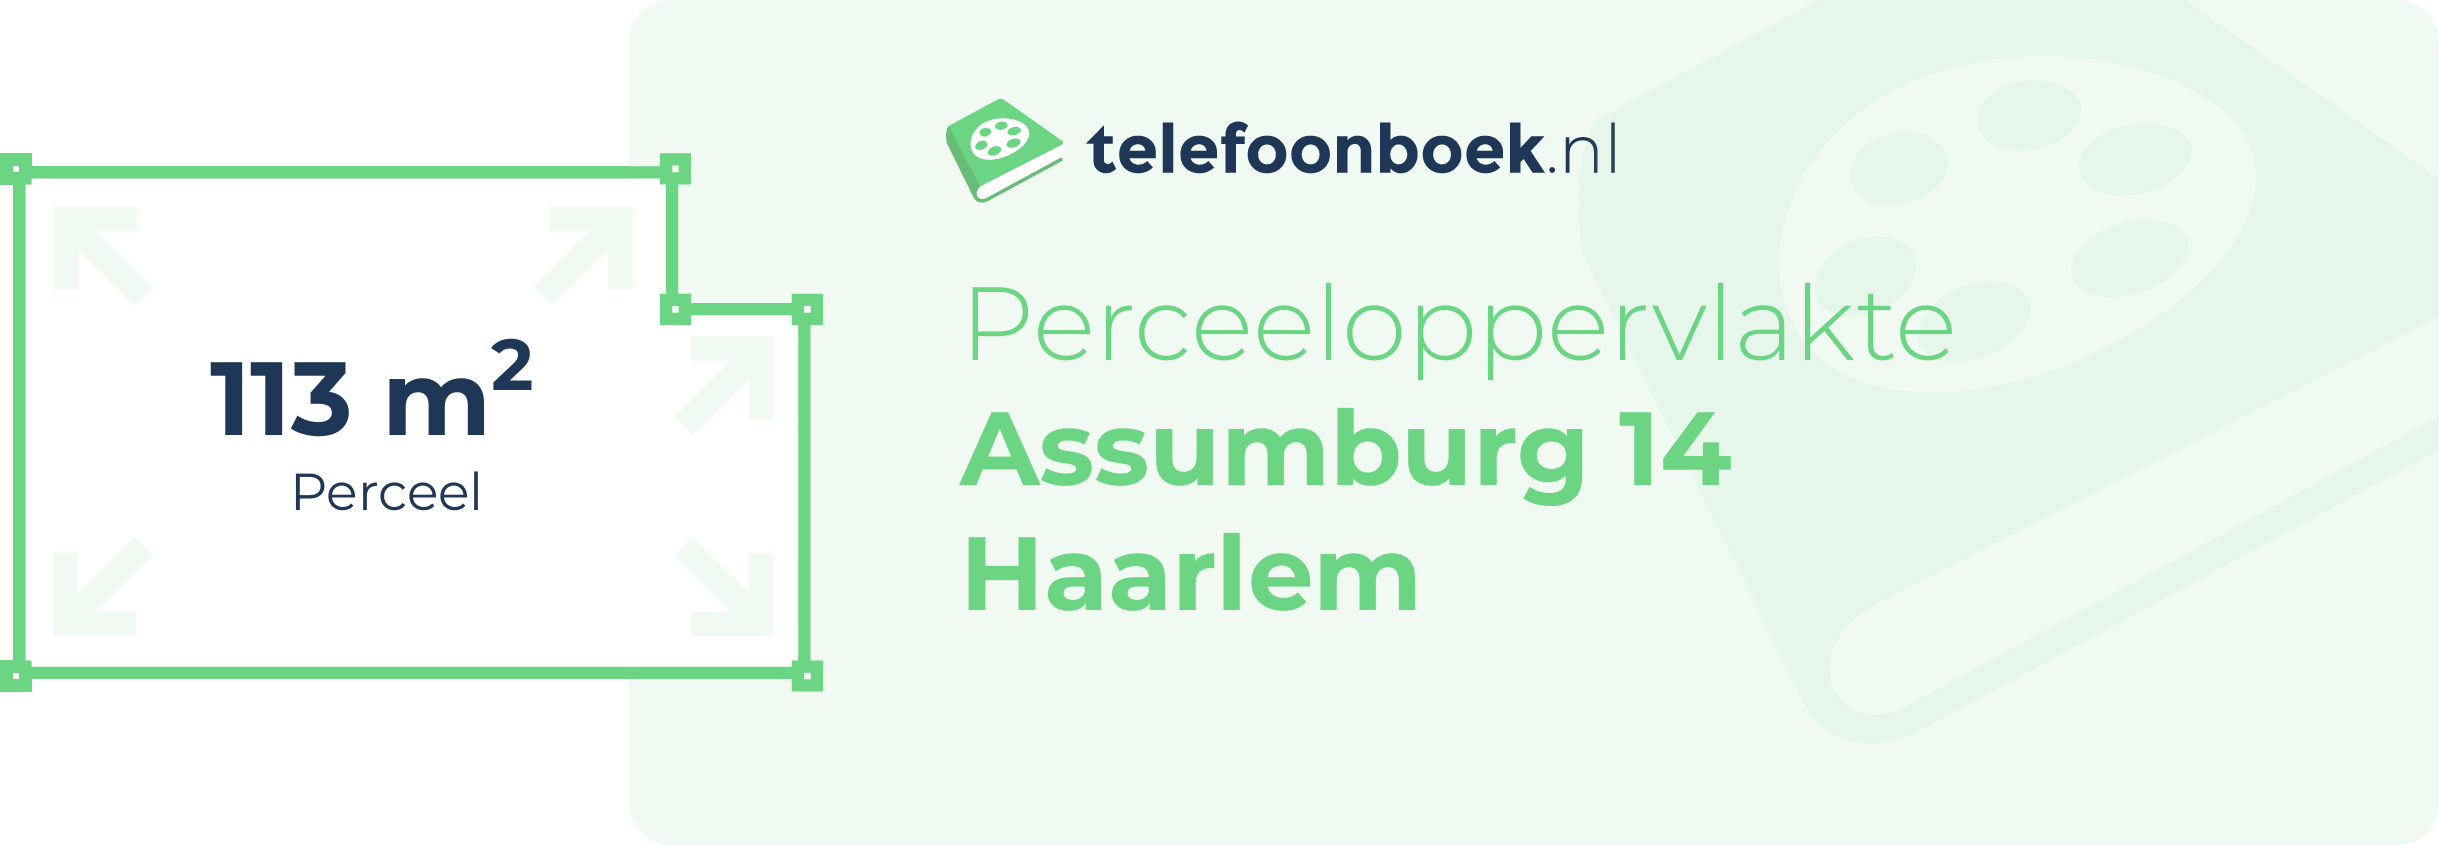 Perceeloppervlakte Assumburg 14 Haarlem